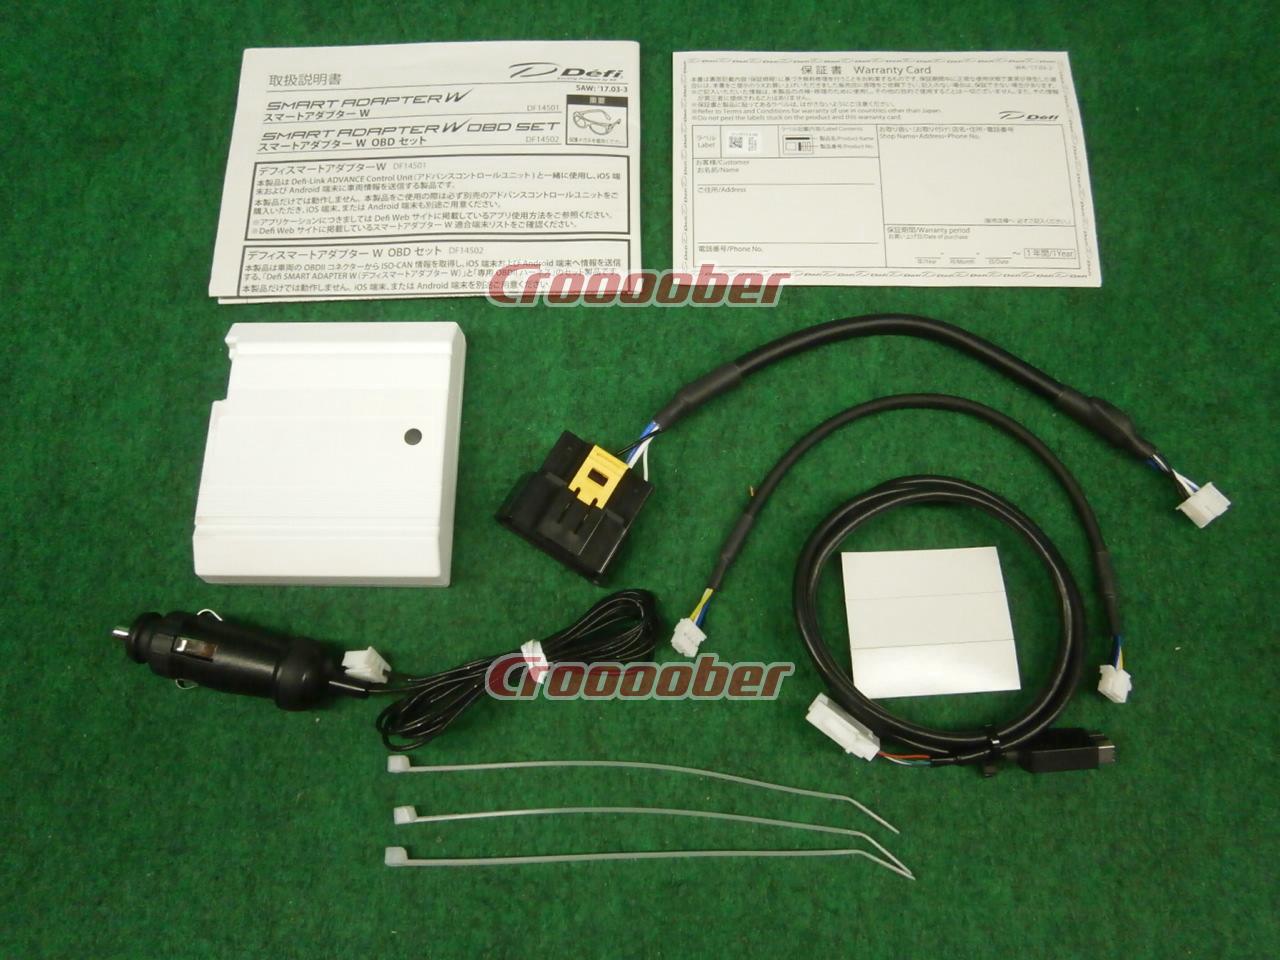 Diffie Nippon Seiki Defi meter Smart Adapter OBD DF-14502 F/S w/Tracking# Japan 